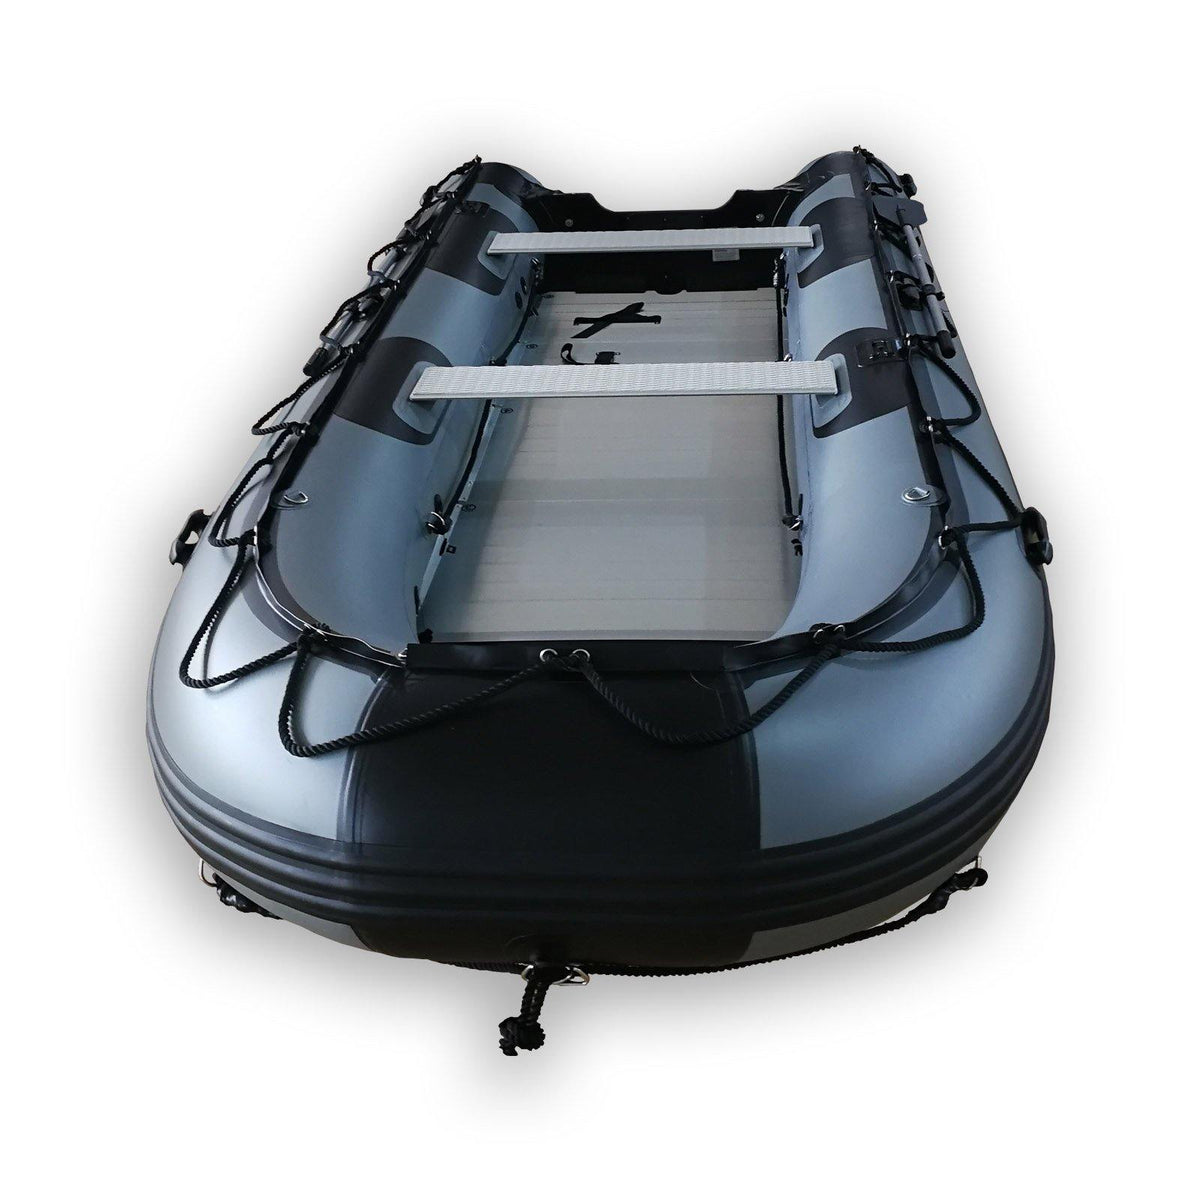 Seamax Recreational 14 Feet Inflatable Boat - Seamax Marine